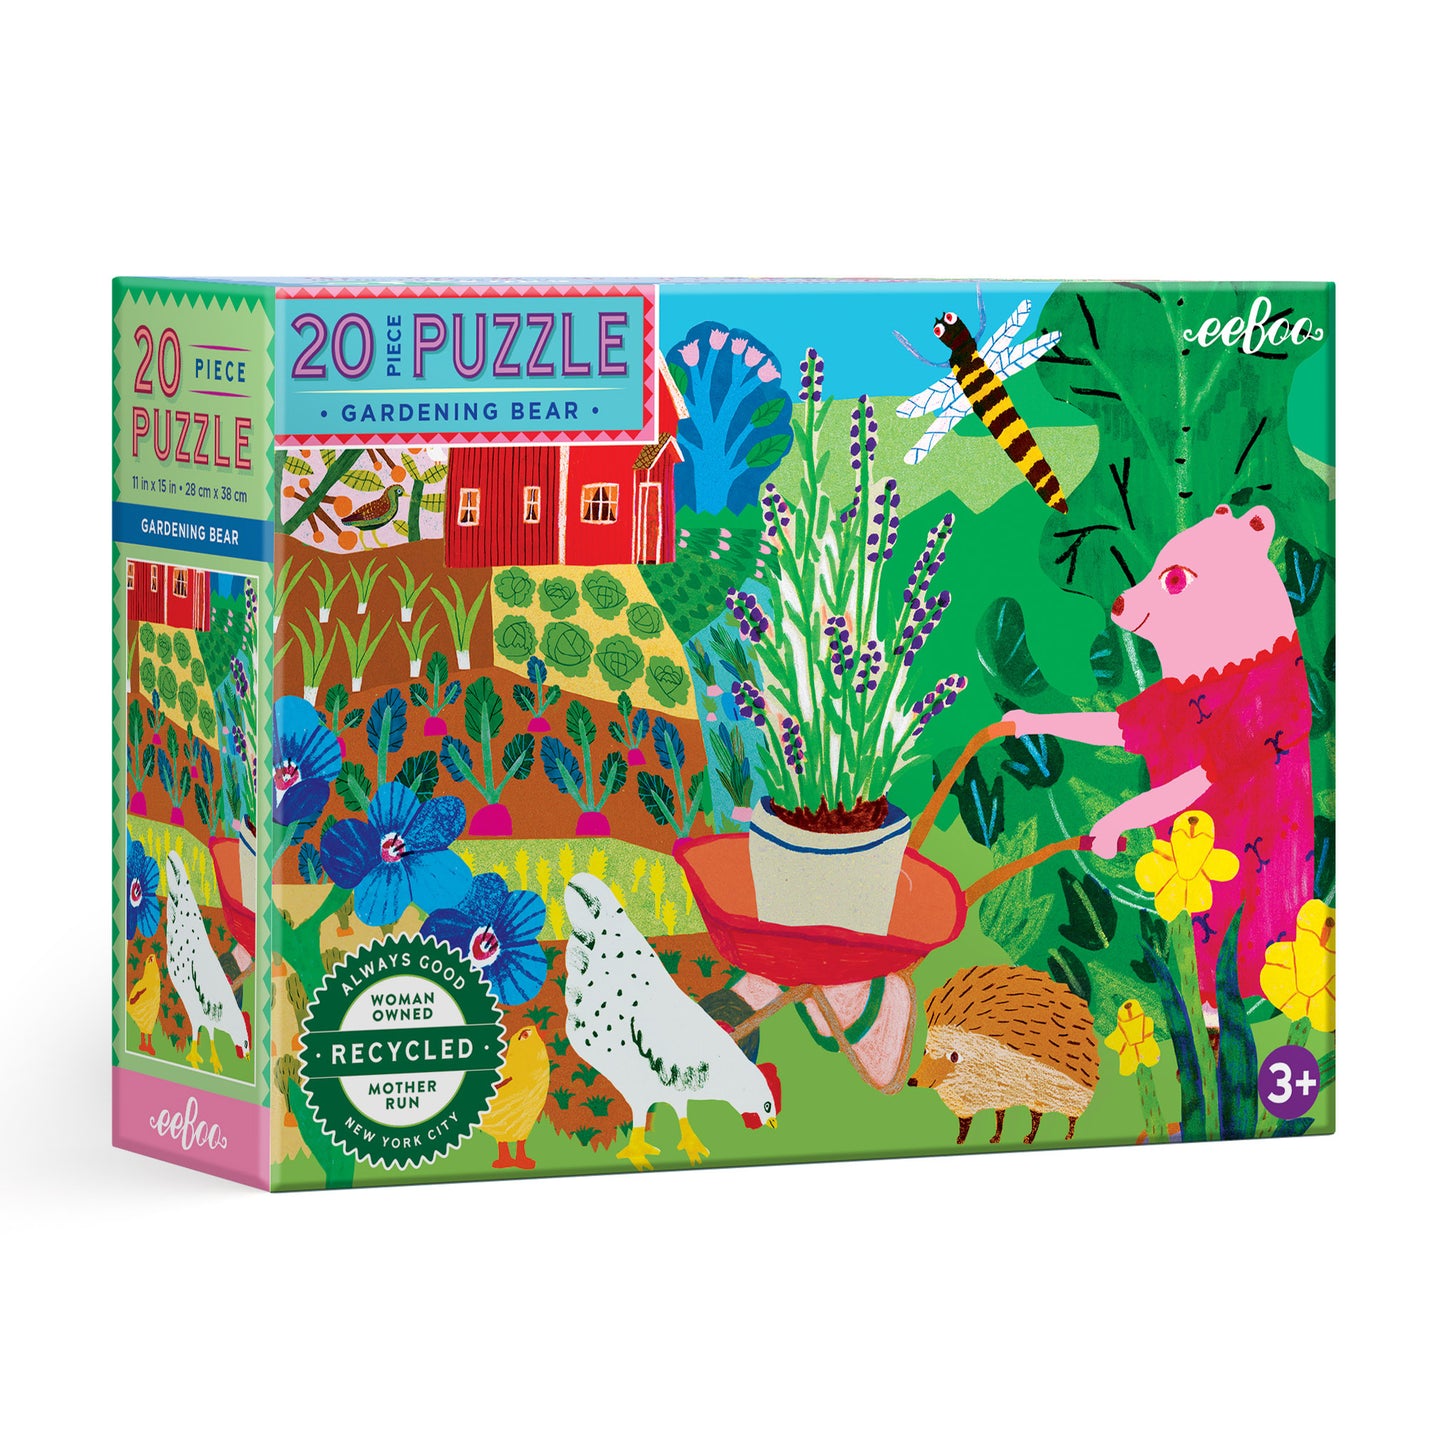 Gardening Bear 20 Piece Jigsaw Puzzle eeBoo Gifts for Kids 3+